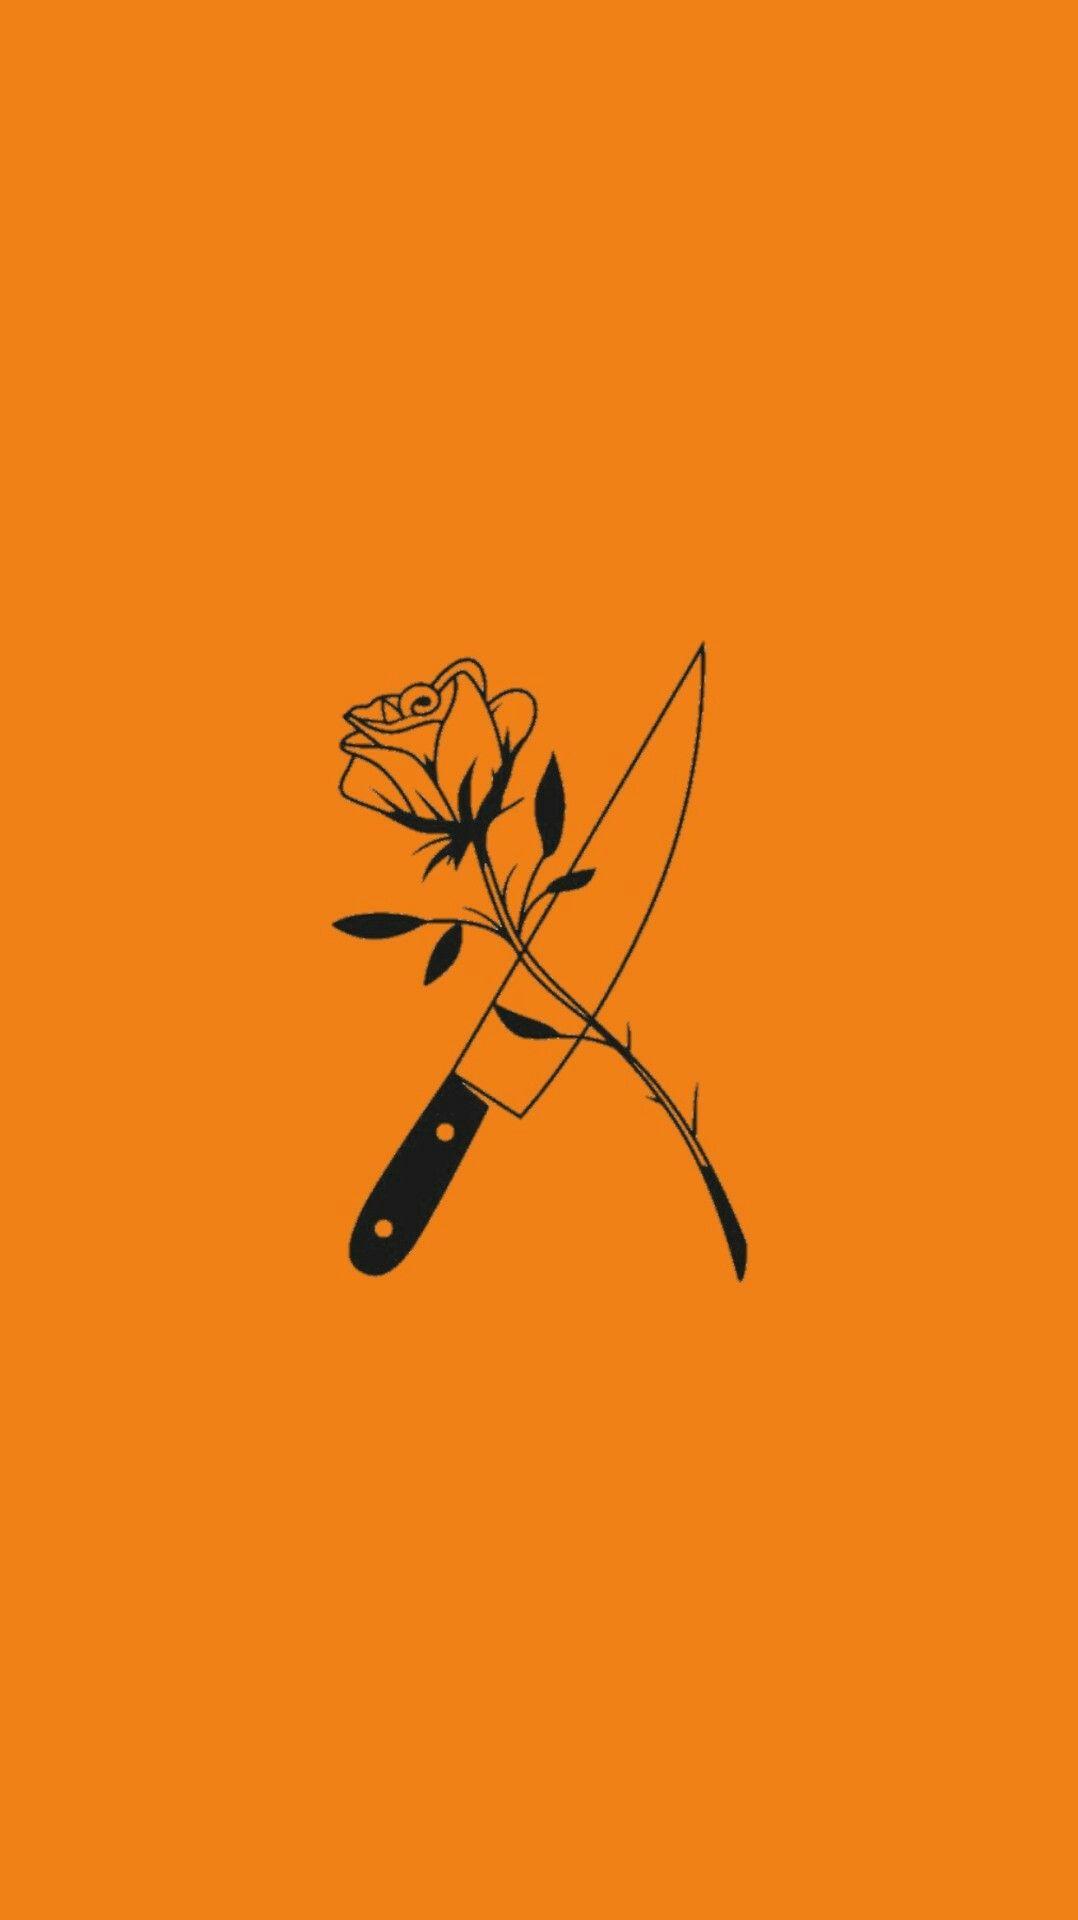 Knife and rose on an orange background - Pastel orange